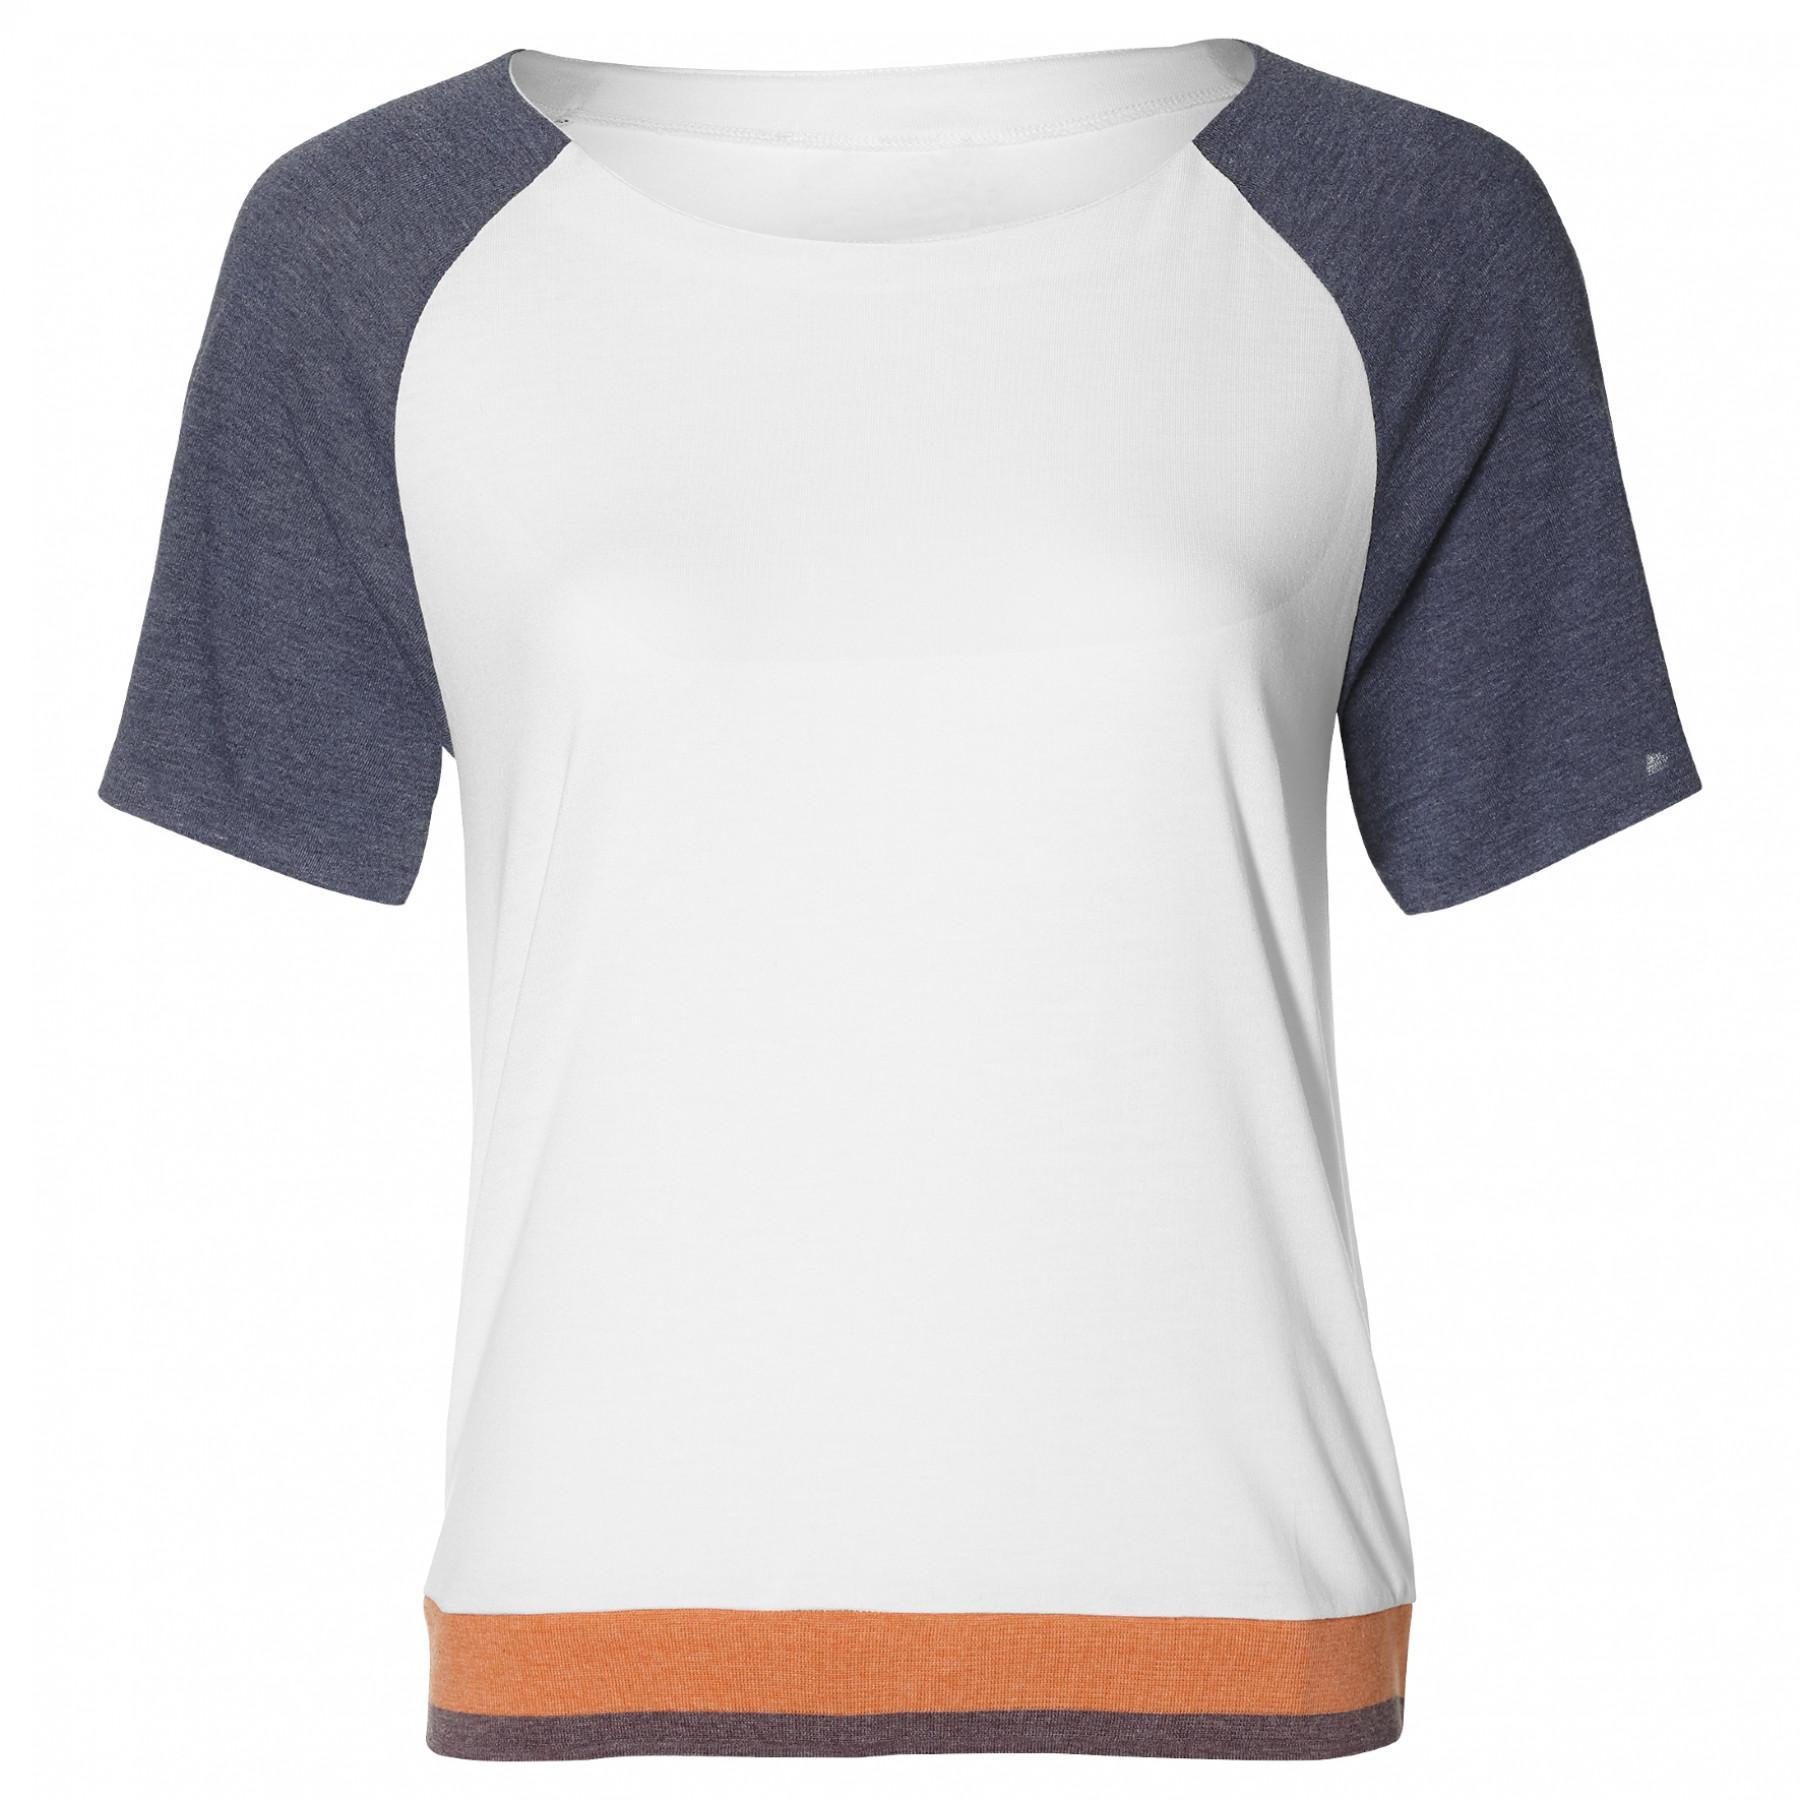 Woman's T-shirt Asics Gel Cool 2 Top